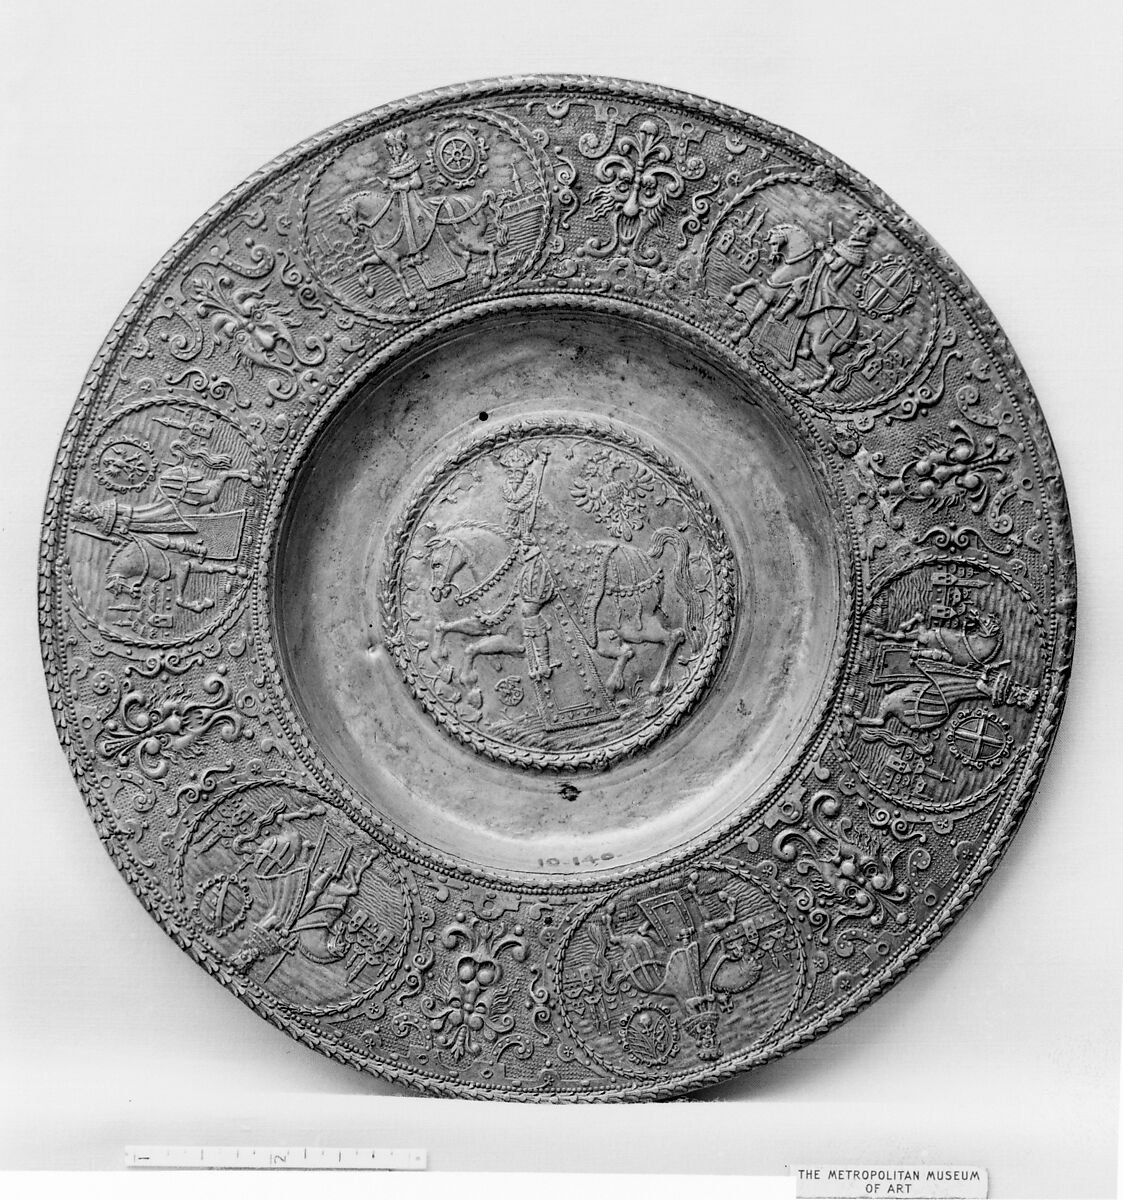 Plate (Kaiserteller), Paulus Öham the younger (master 1634, died 1671), Pewter, German, Nuremberg 